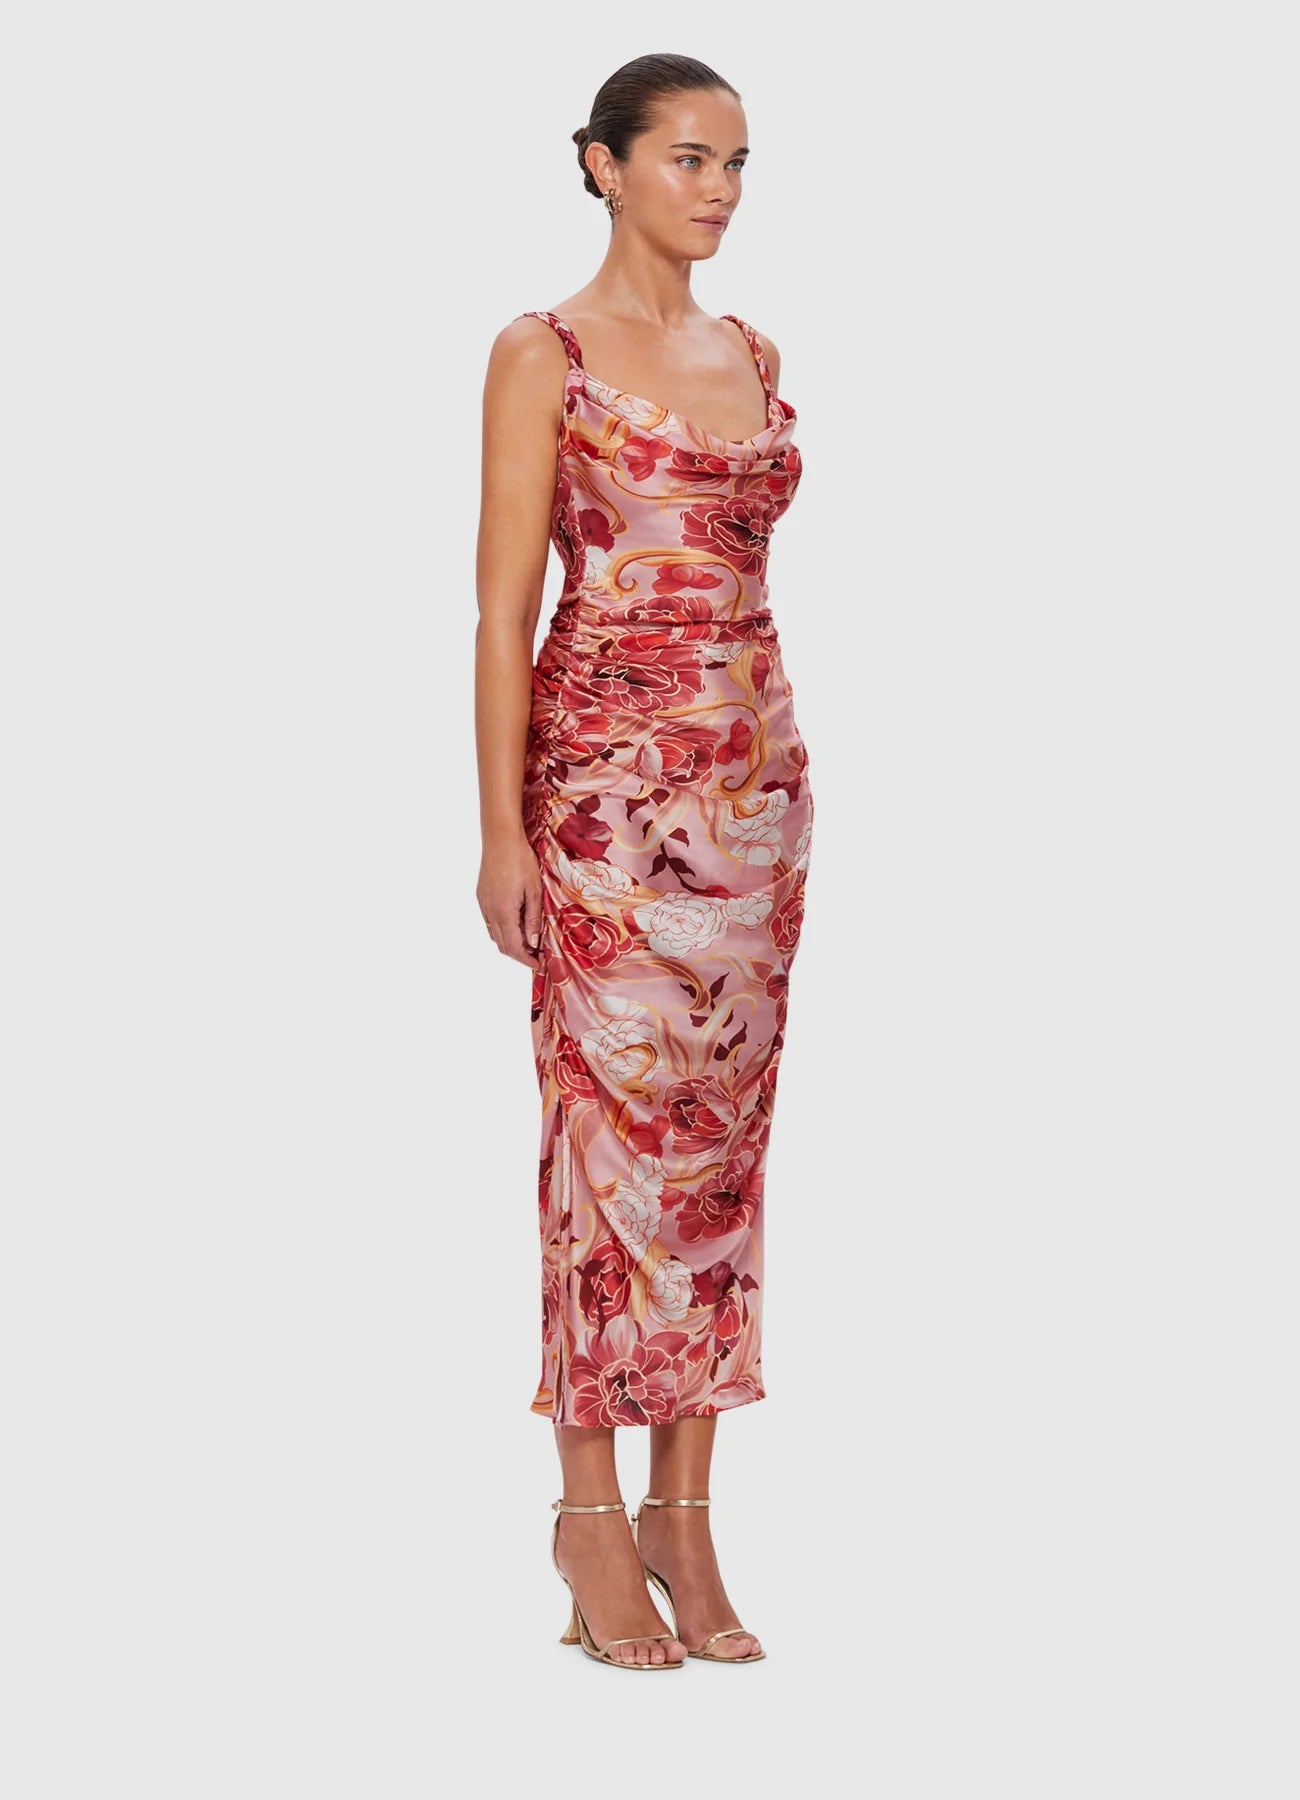 Rachel Cowl Neck Slip Dress - Adorn Print in Passion